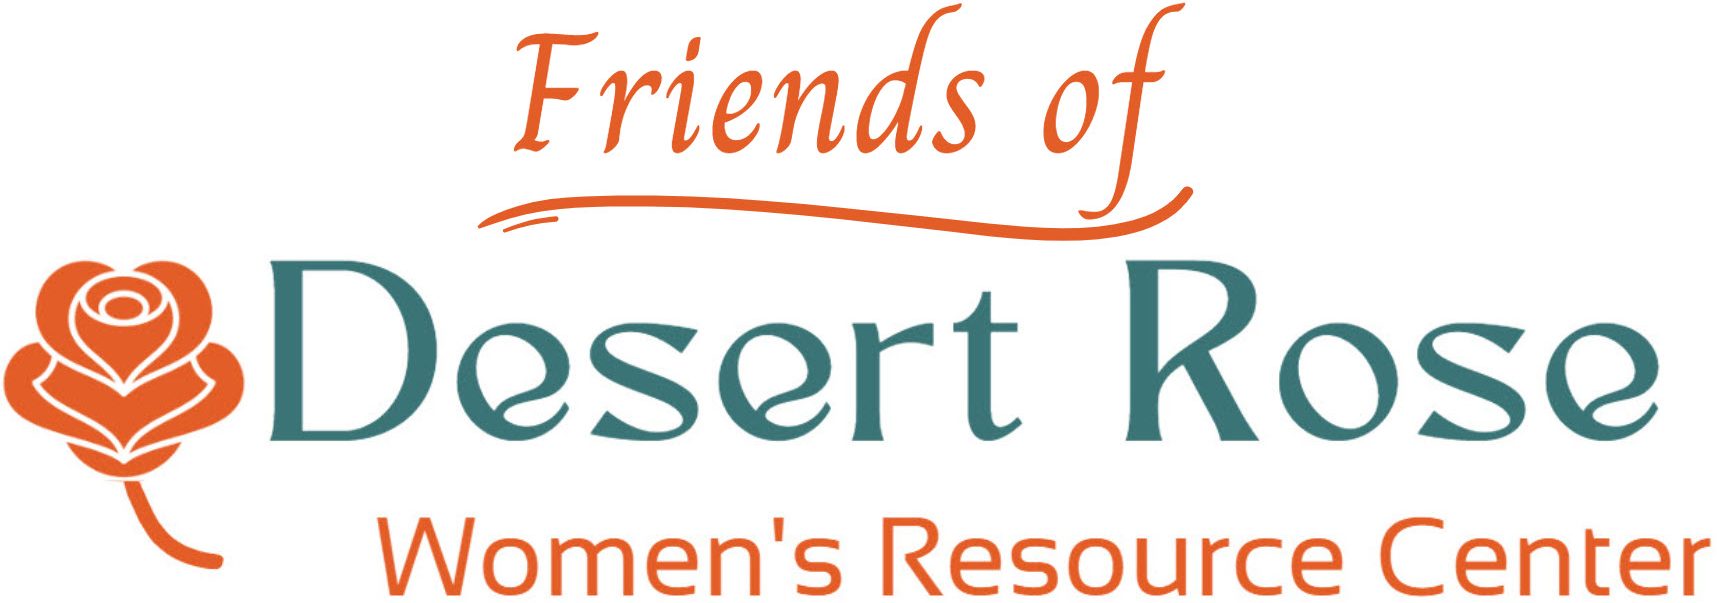 Desert Rose Women's Resource Center